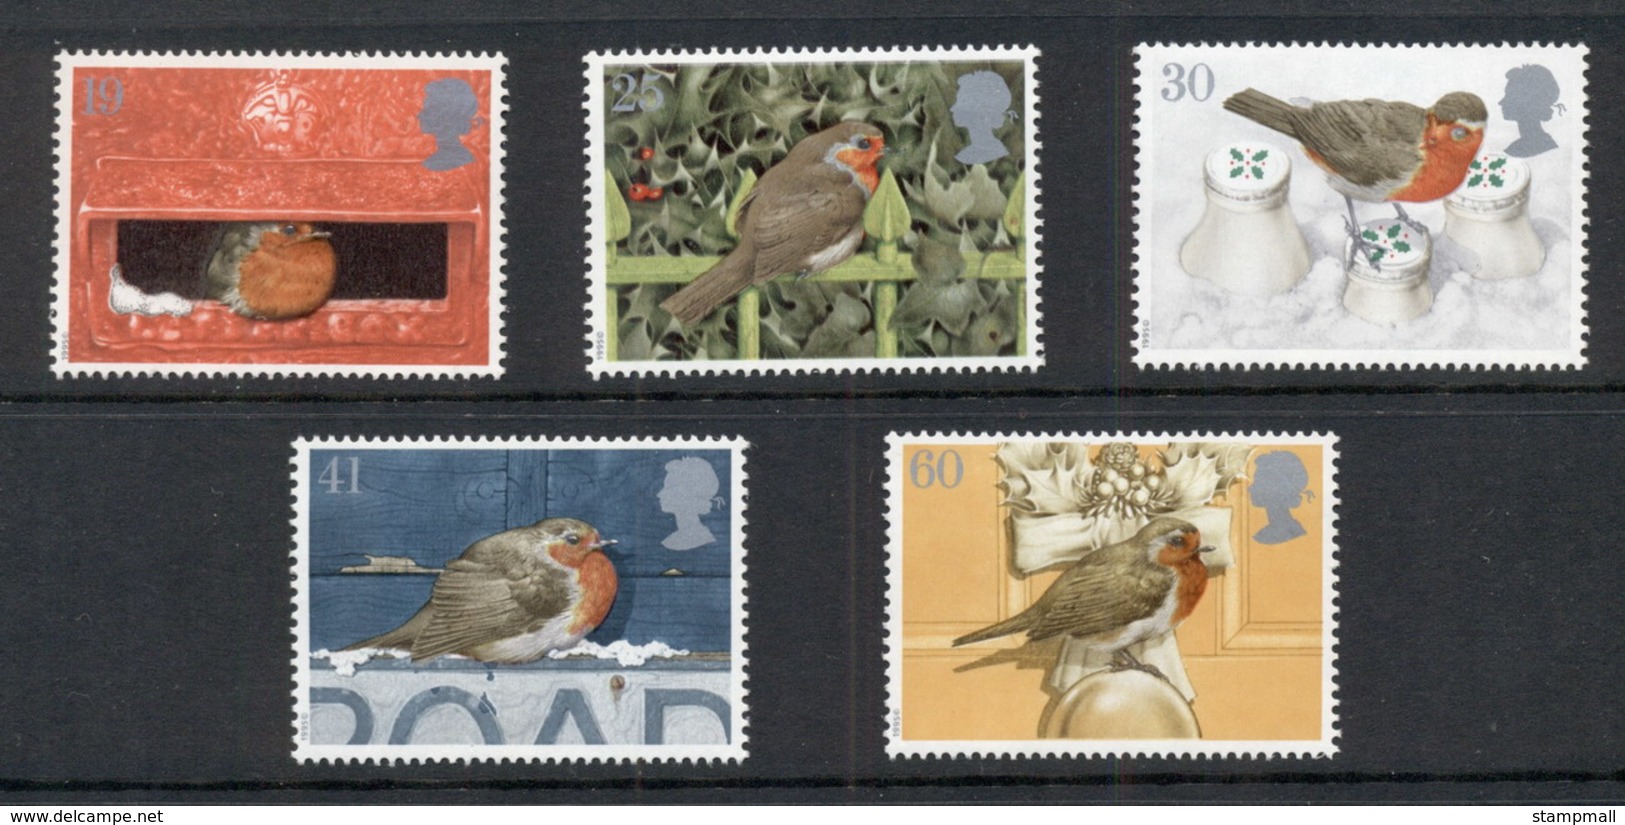 GB 1995 Xmas, Robins, Birds MUH - Unclassified